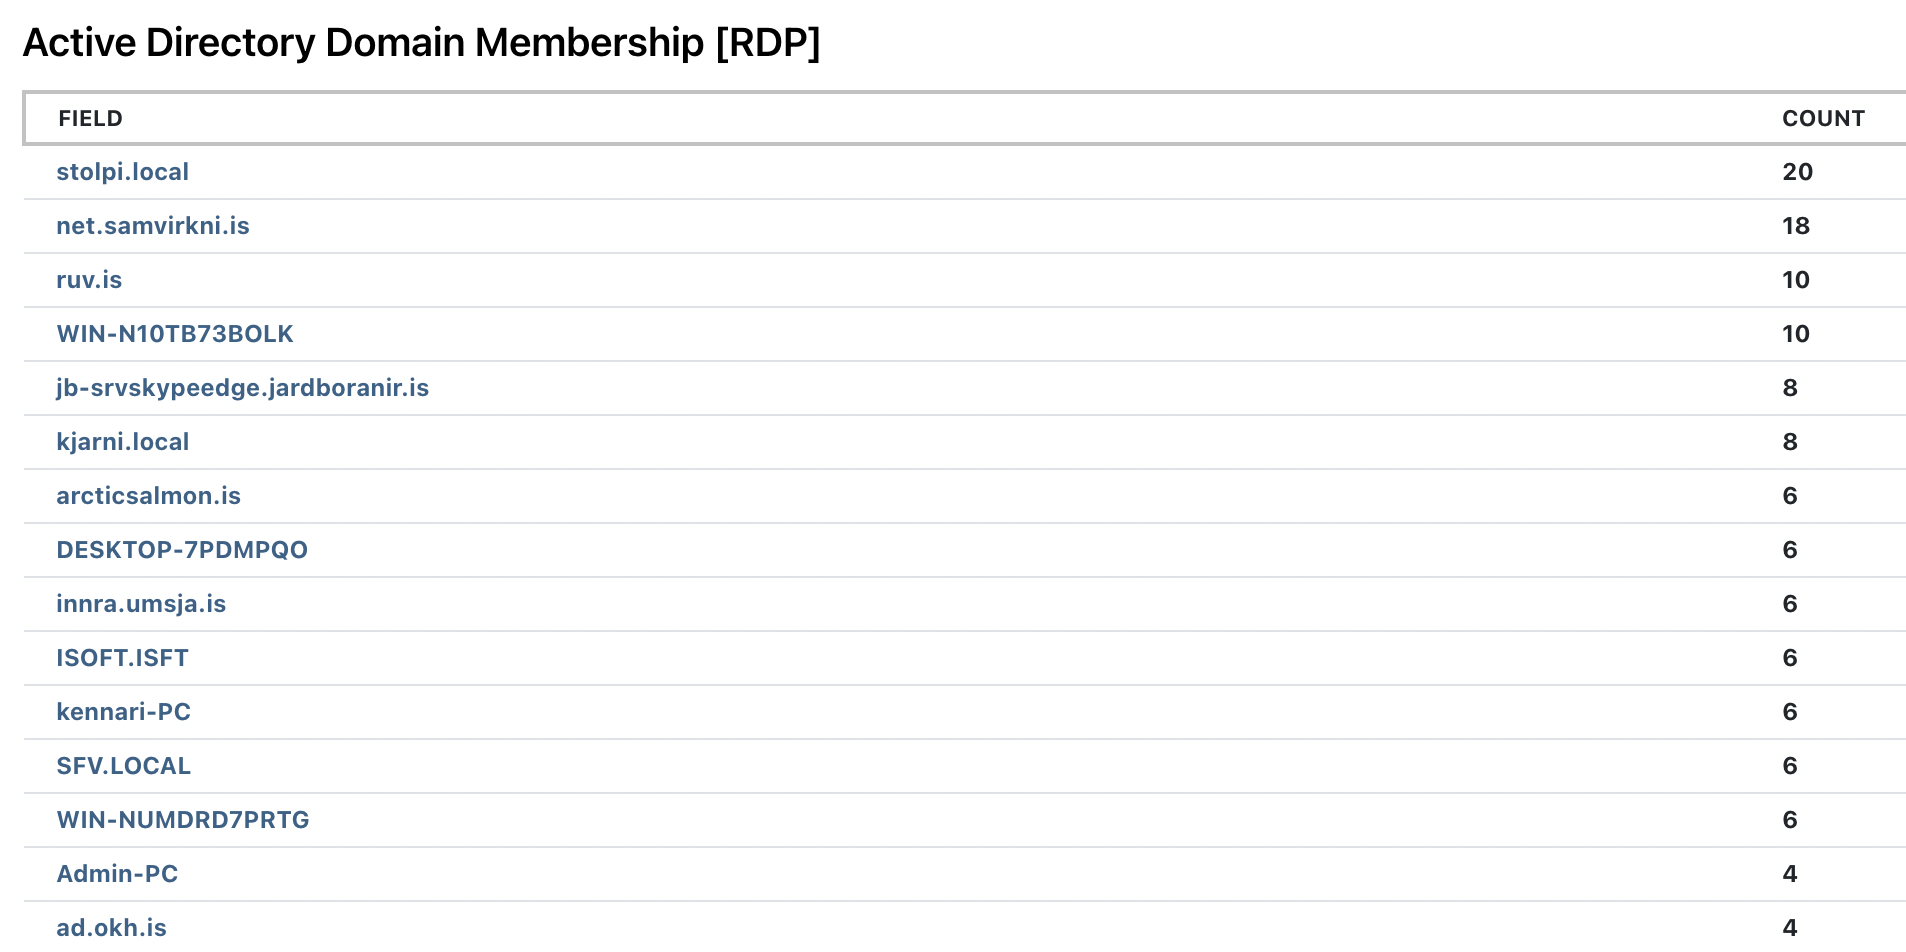 Report on Domain Membership Via RDP